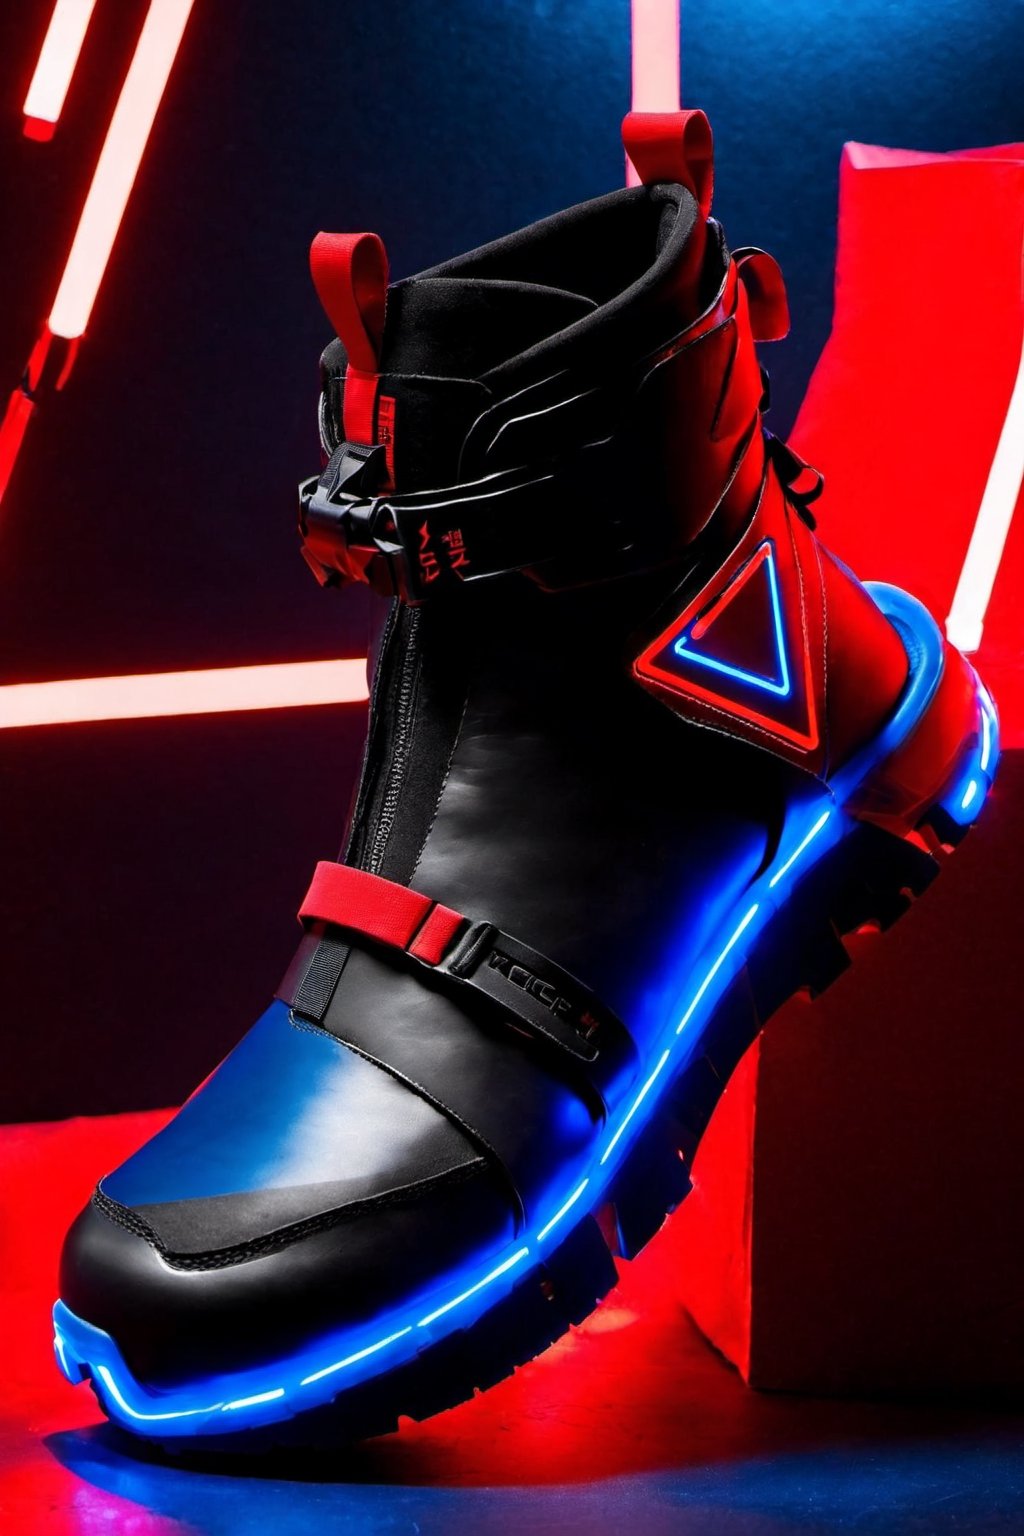 Tactial footware,Boots,Tabi,cyberpunk style,cyberpunk,red,black,blue,triangle